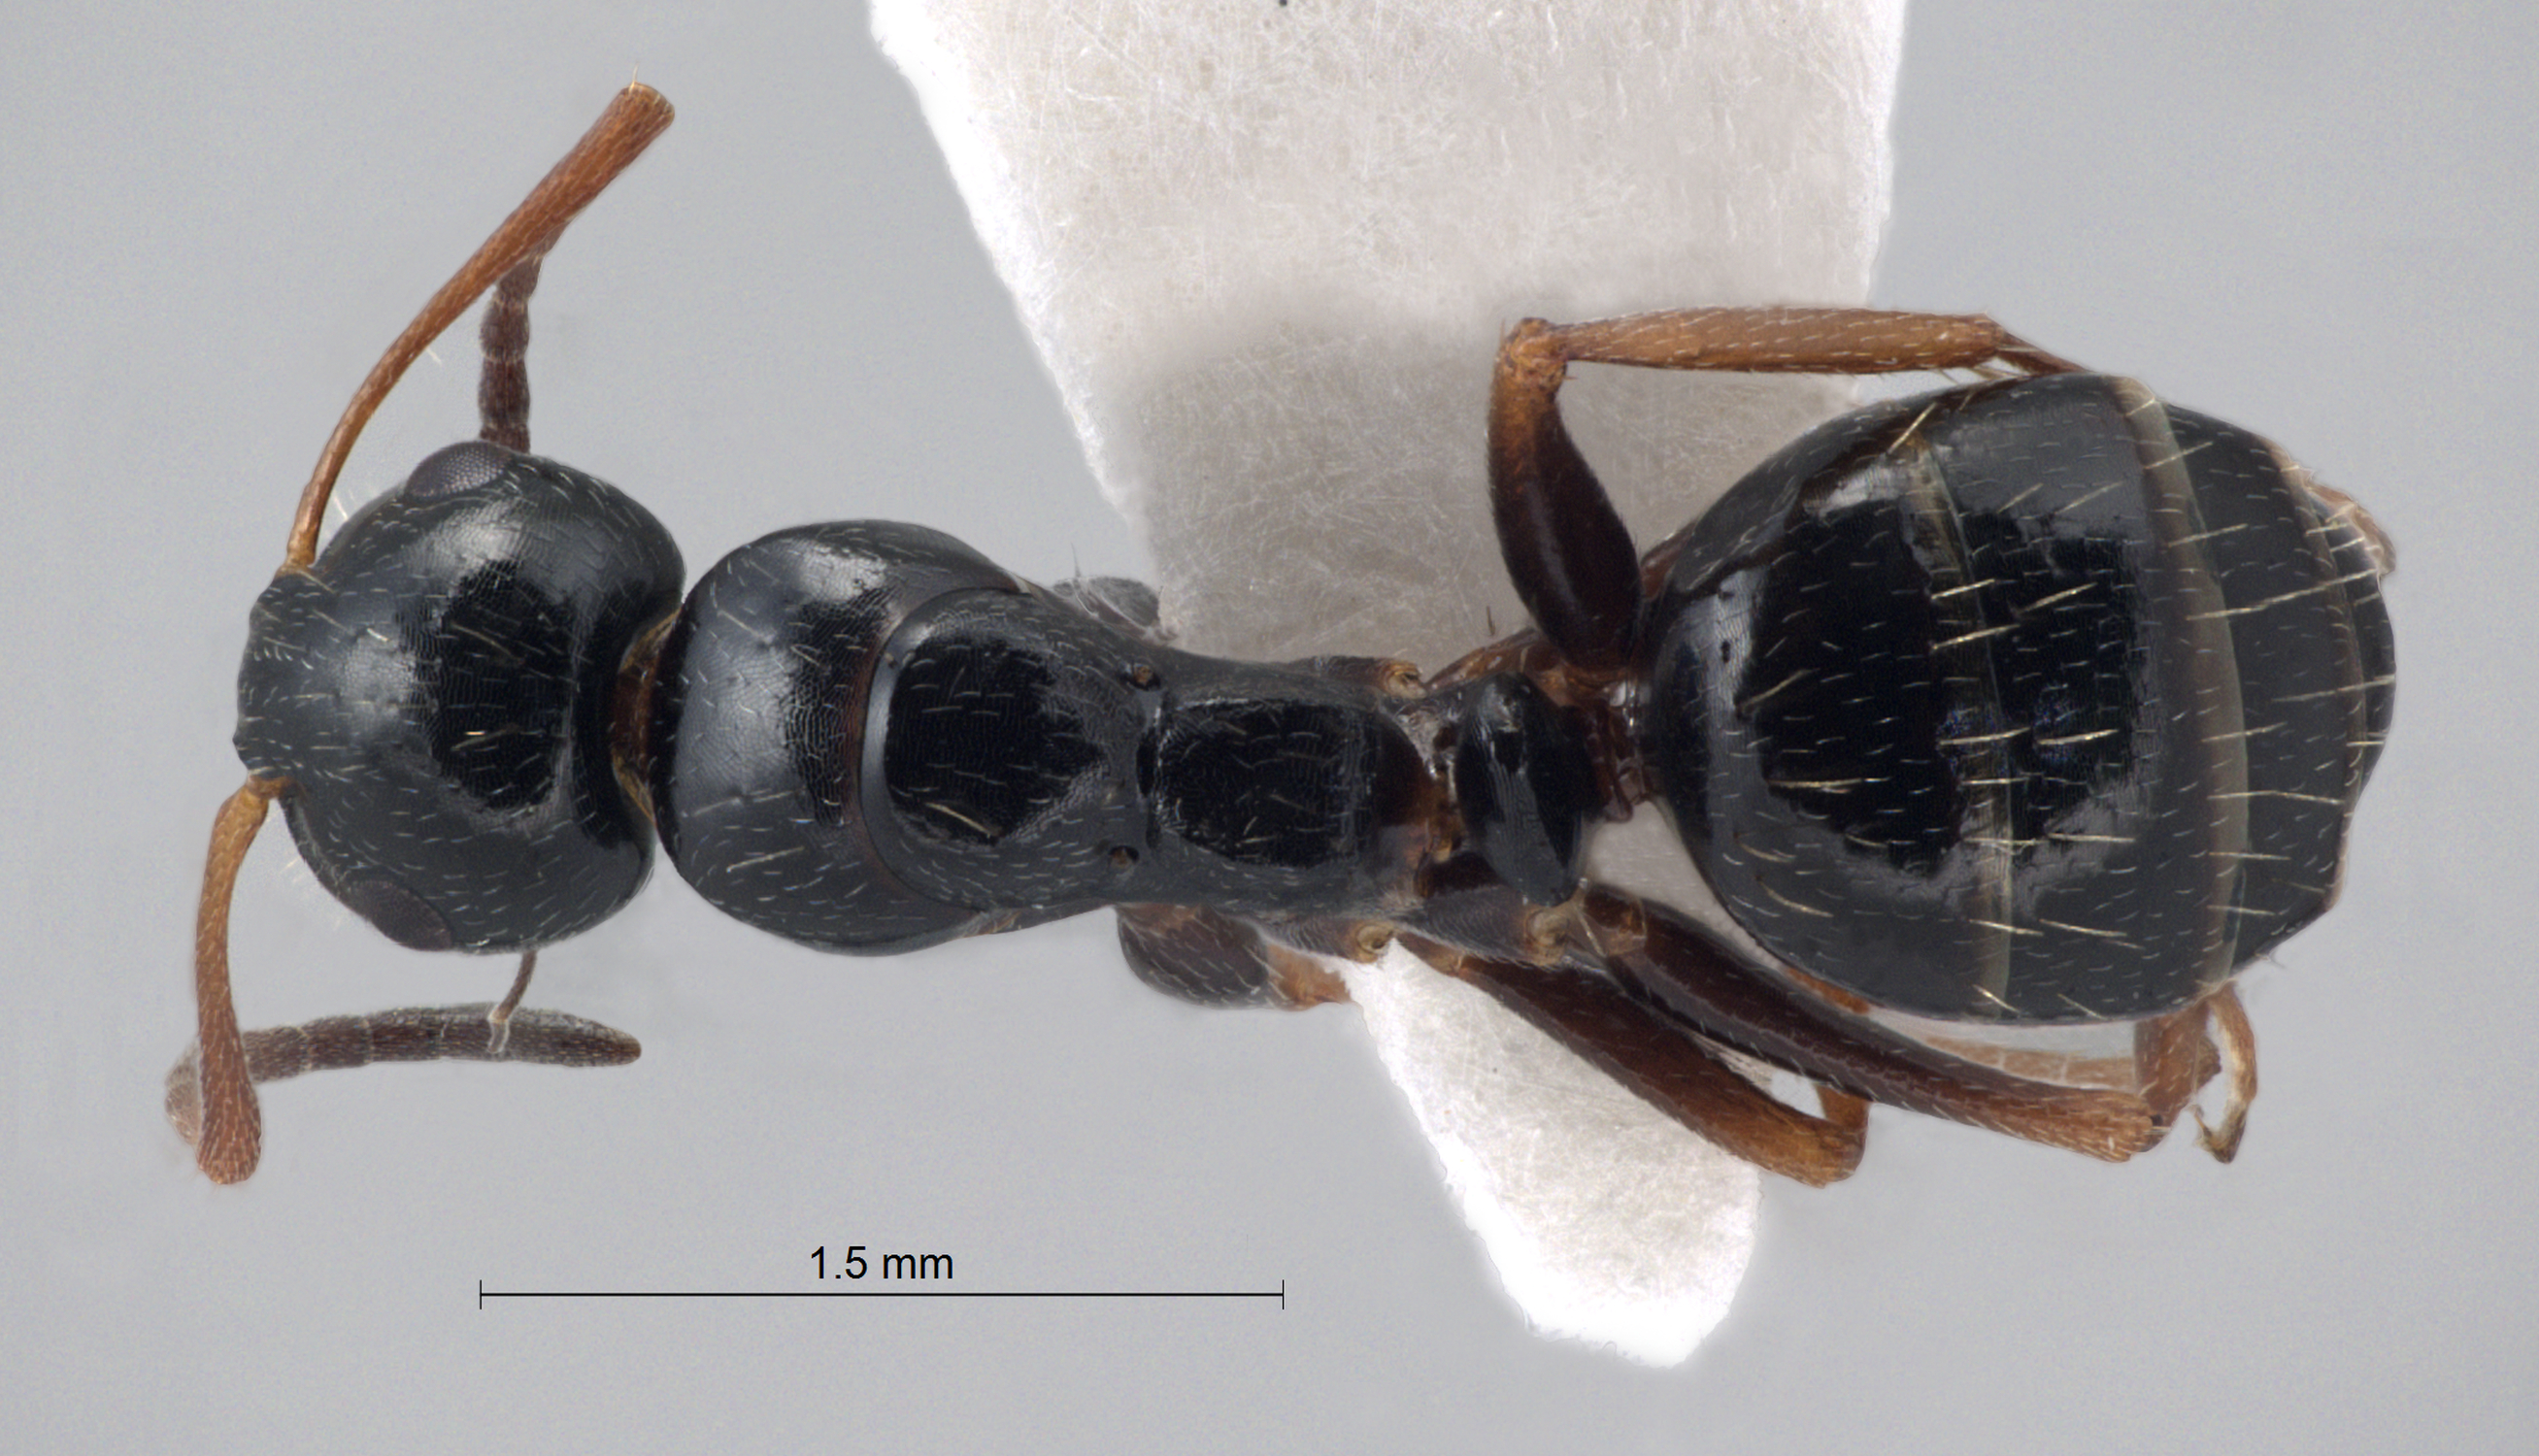  Camponotus piceus dorsal